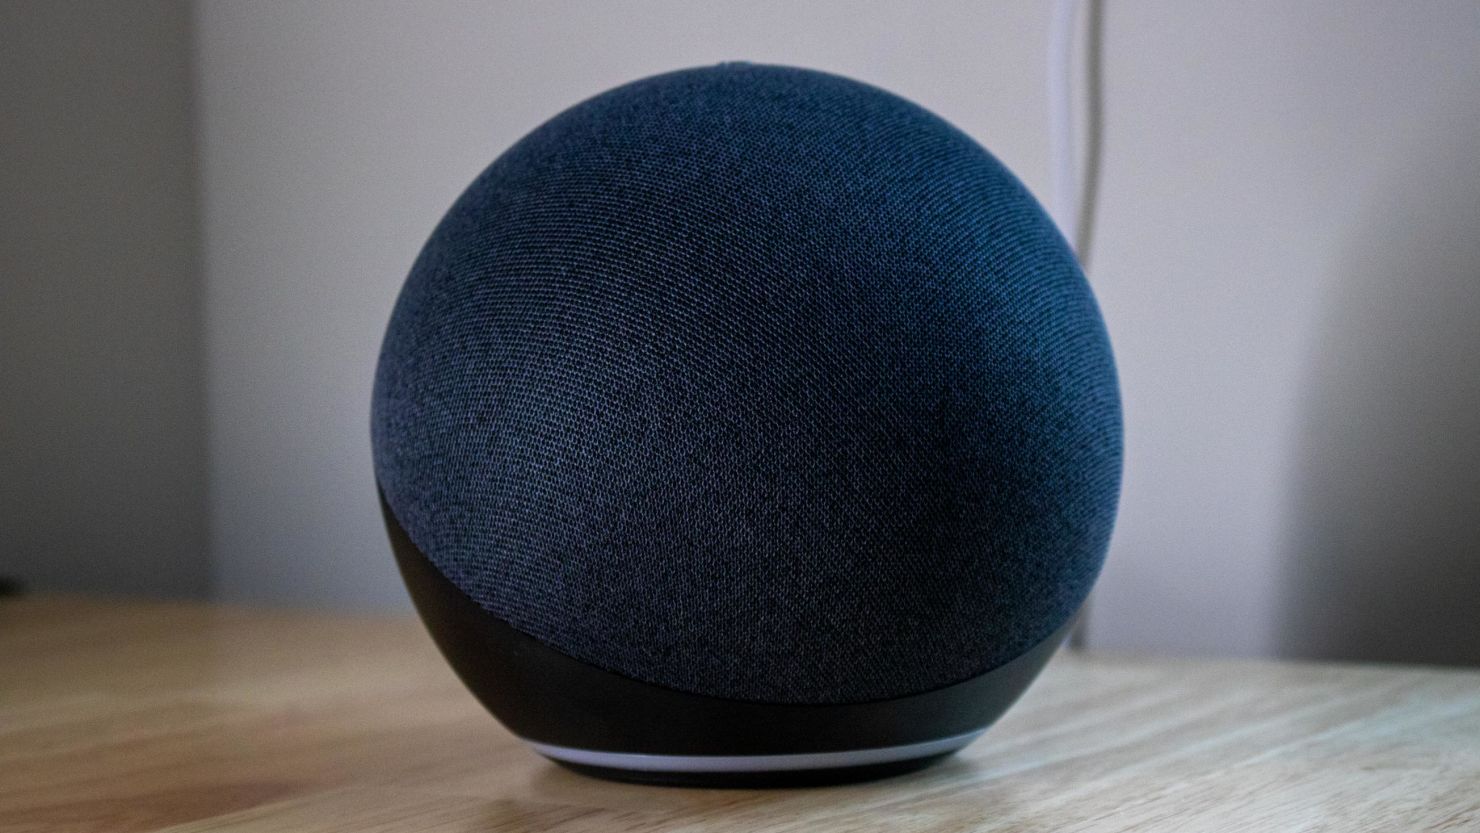 Buy  Echo Dot 3rd Gen Smart Speaker with Alexa - Black in